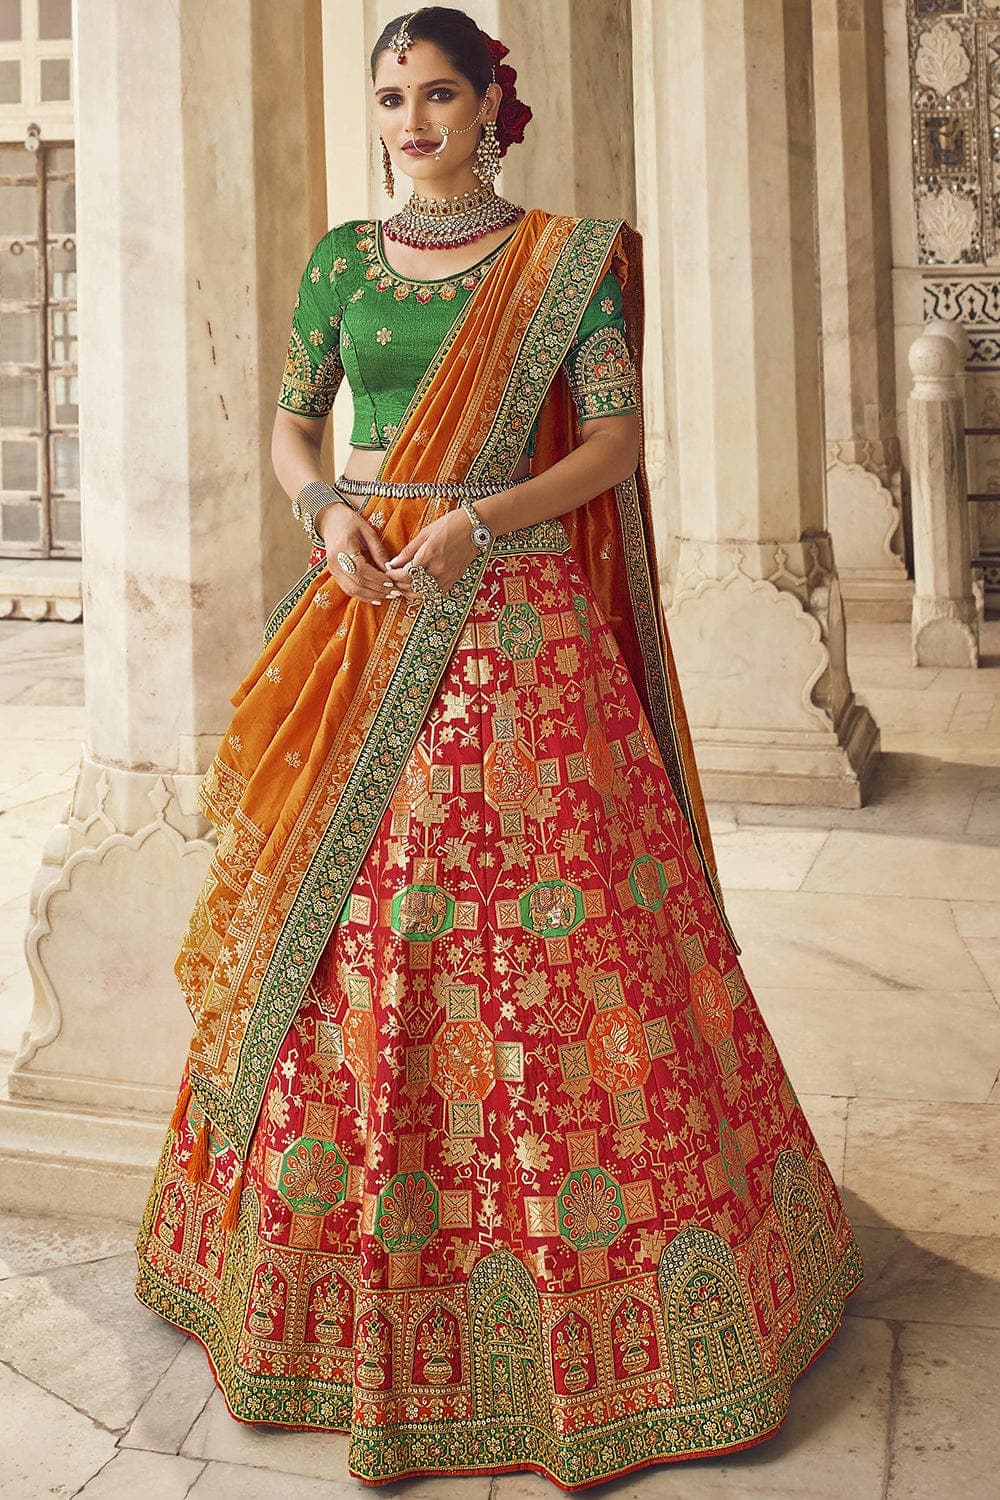 Beautiful Red/Green Bridal Lehenga for Sale in Haveli, Maharashtra  Classified | IndiaListed.com